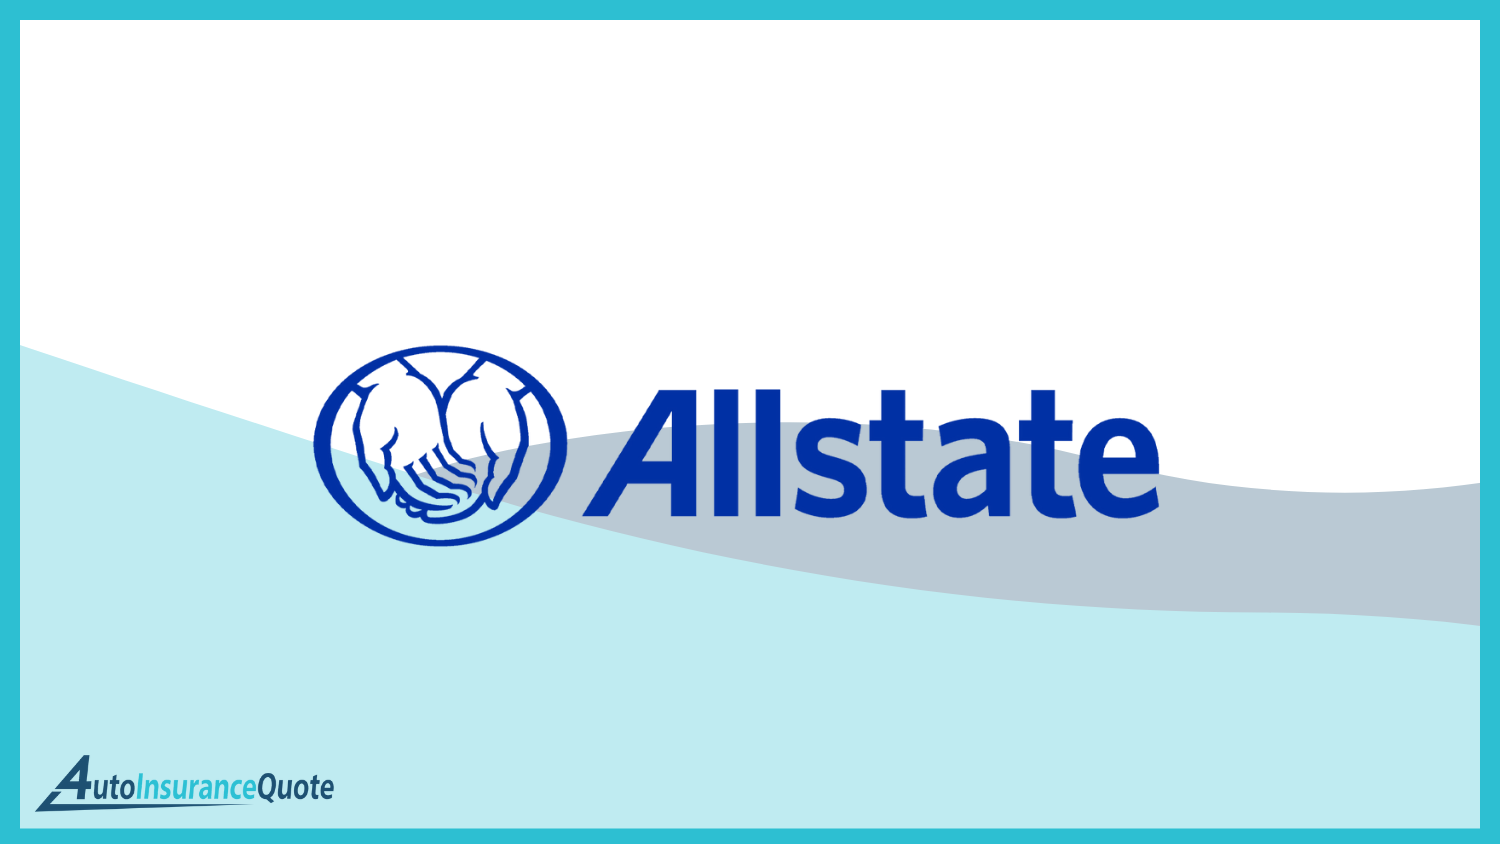 Allstate: Best Auto Insurance Companies for Seniors